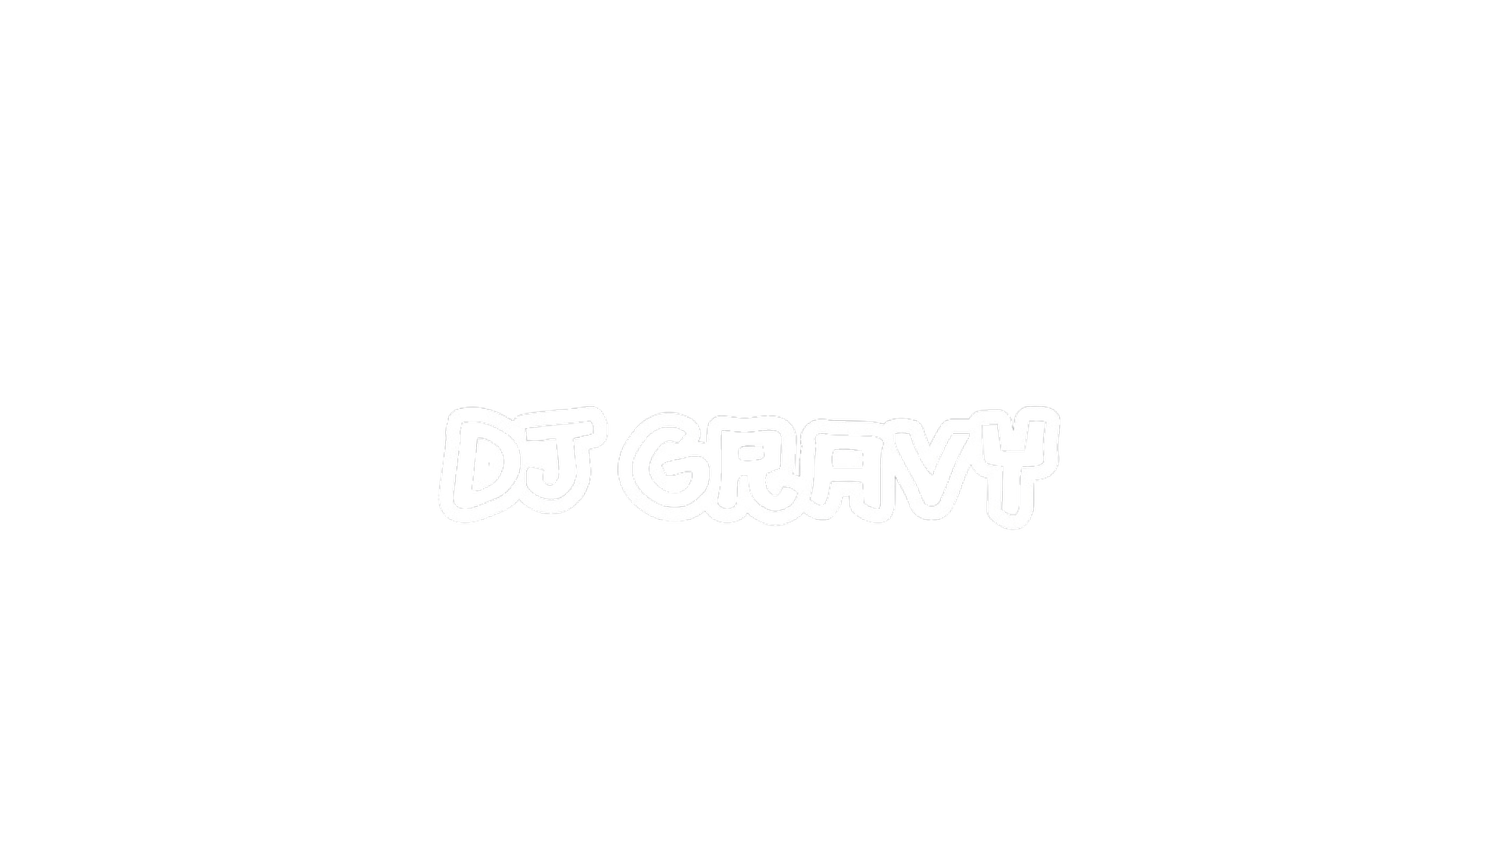  DJ GRAVY